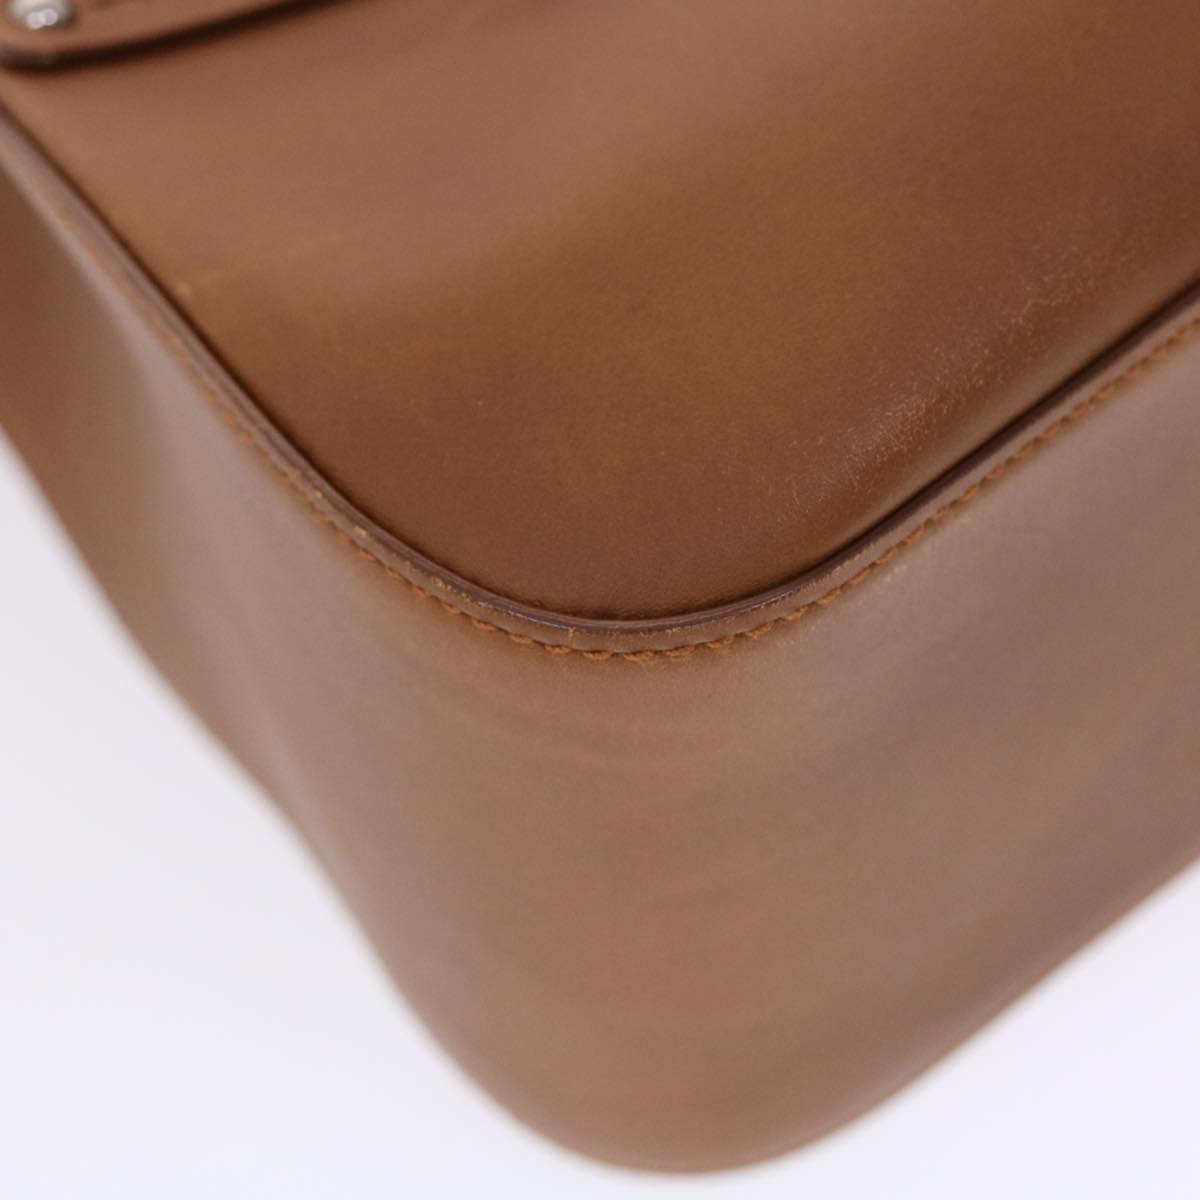 Salvatore Ferragamo Shoulder Bag Leather Brown Auth 49486